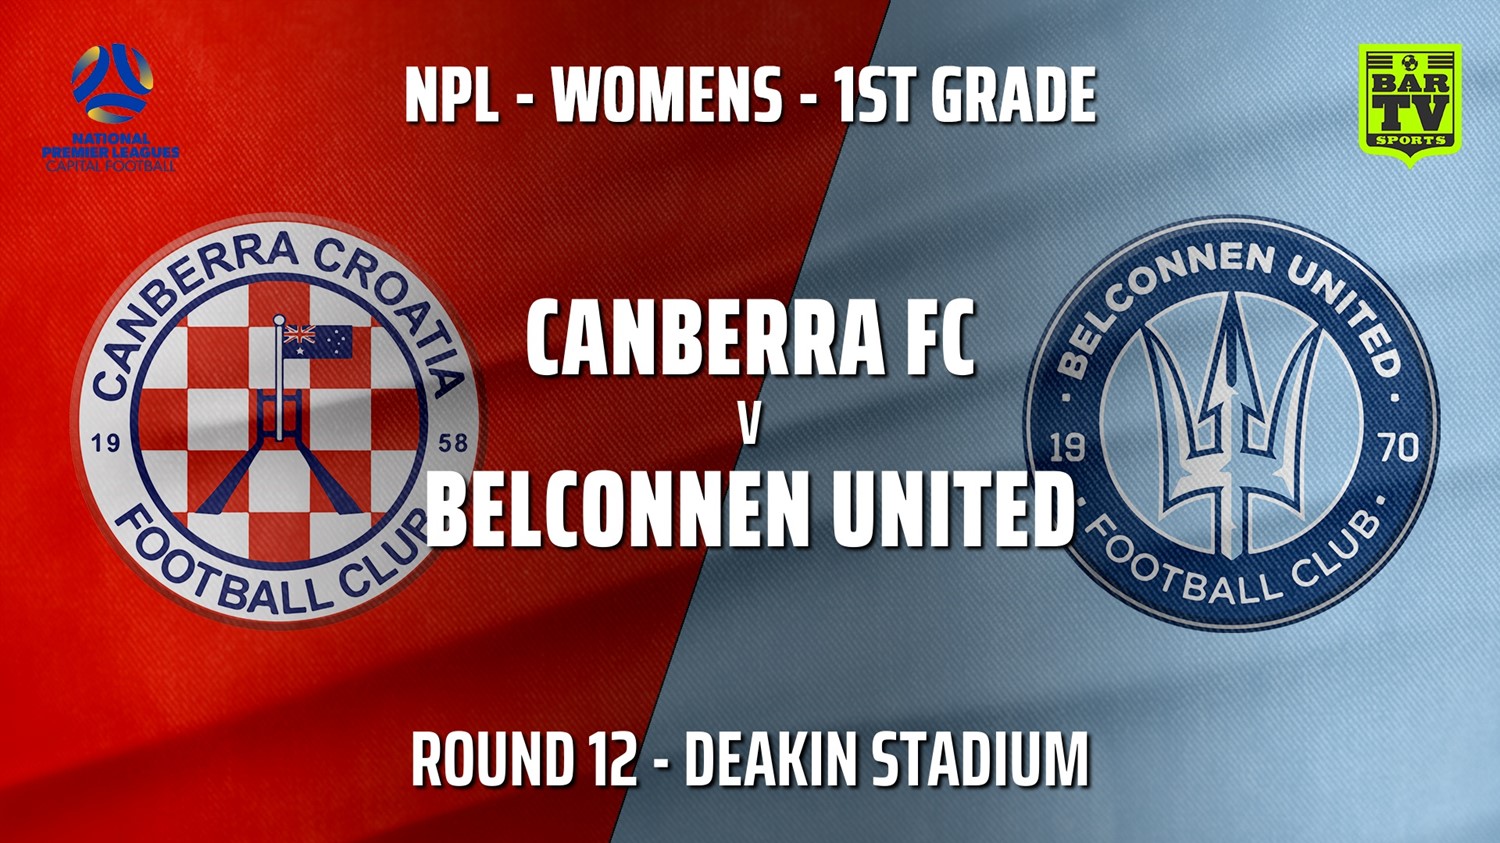 210703-Capital Womens Round 12 - Canberra FC (women) v Belconnen United (women) Slate Image